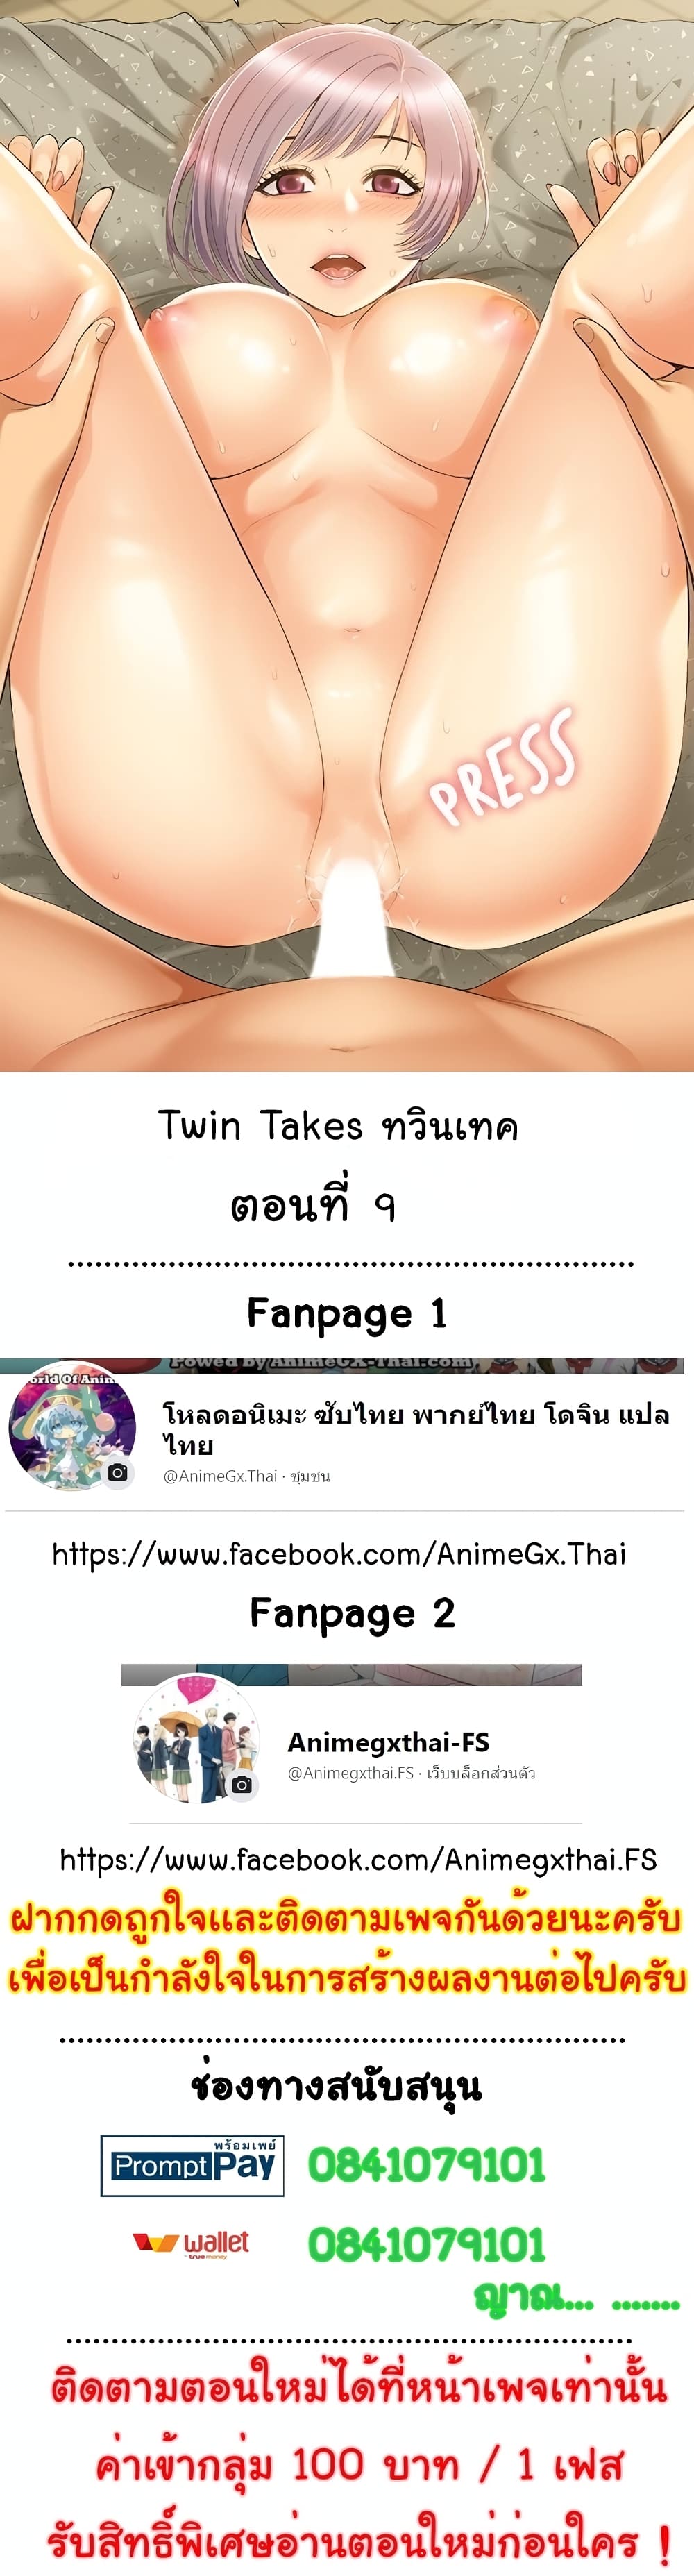 Twin Takes 9 (1)